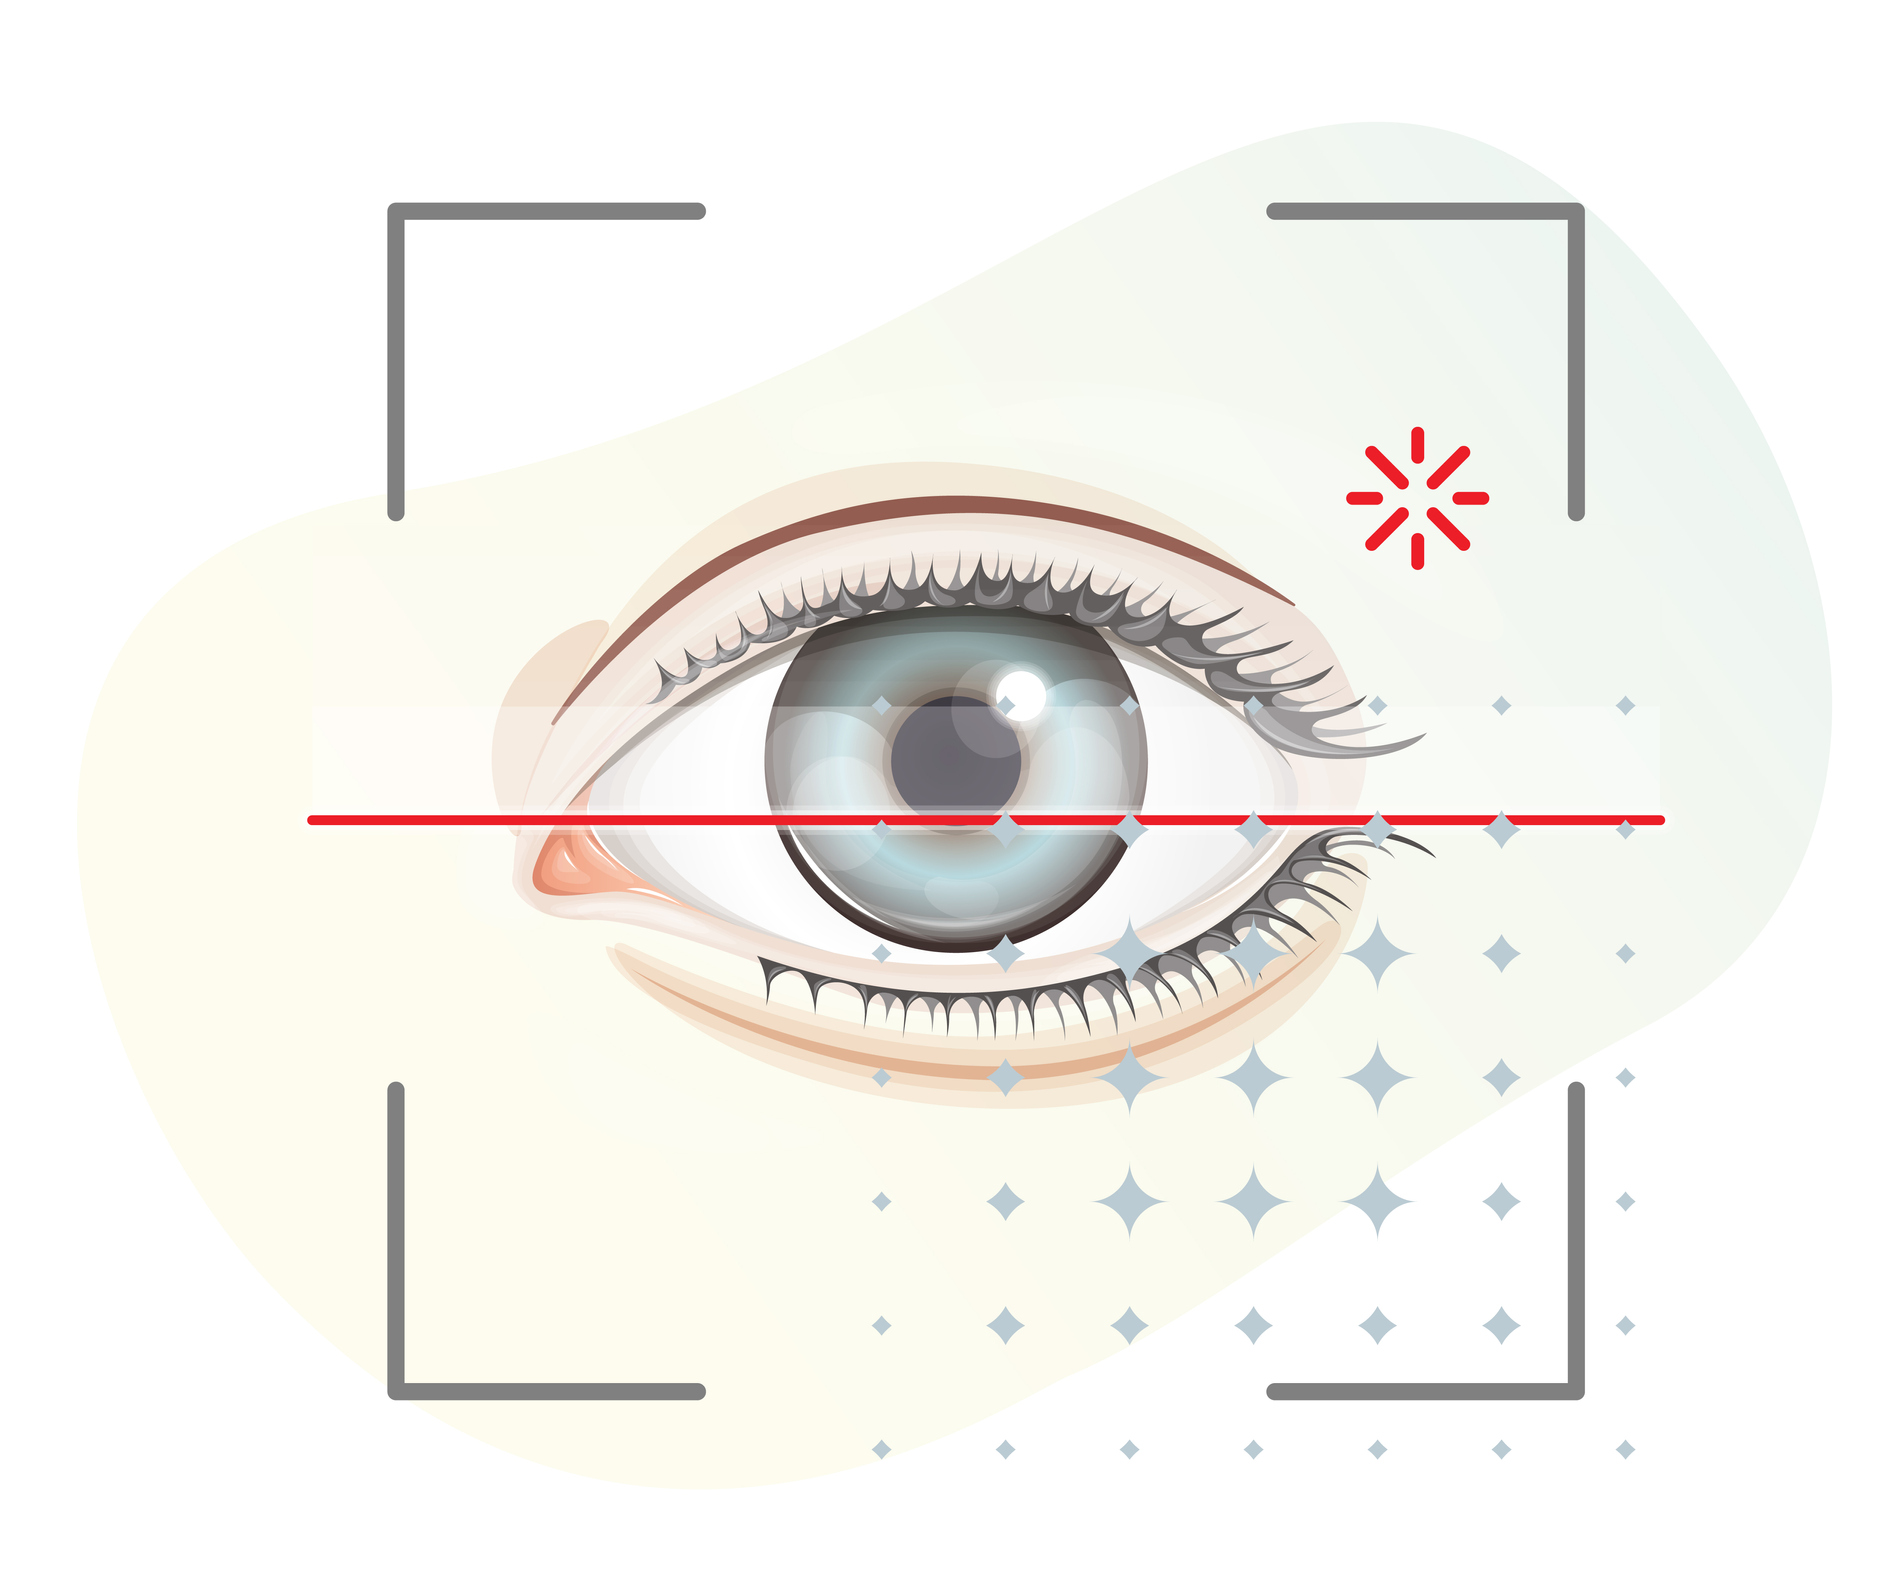 Angle-Closure Glaucoma: Causes, Symptoms, And Treatment